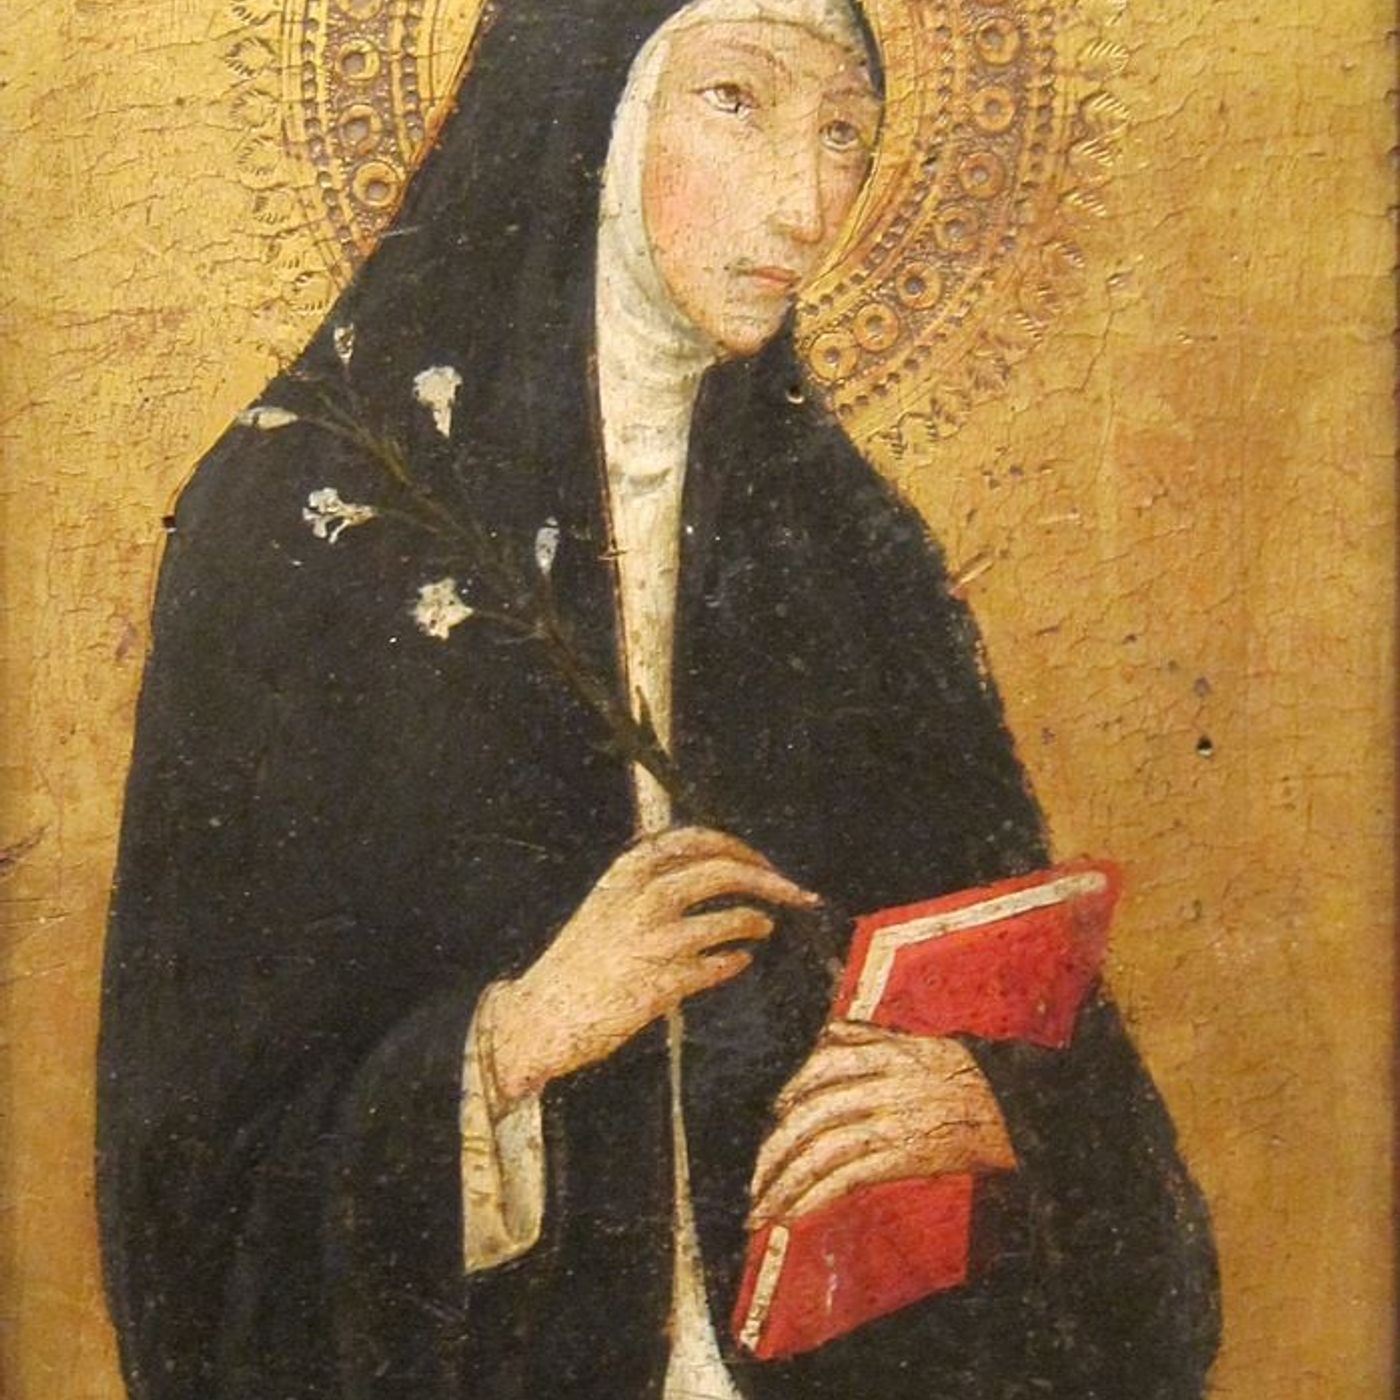 Catherine of Siena: a Mystical Union of Flesh